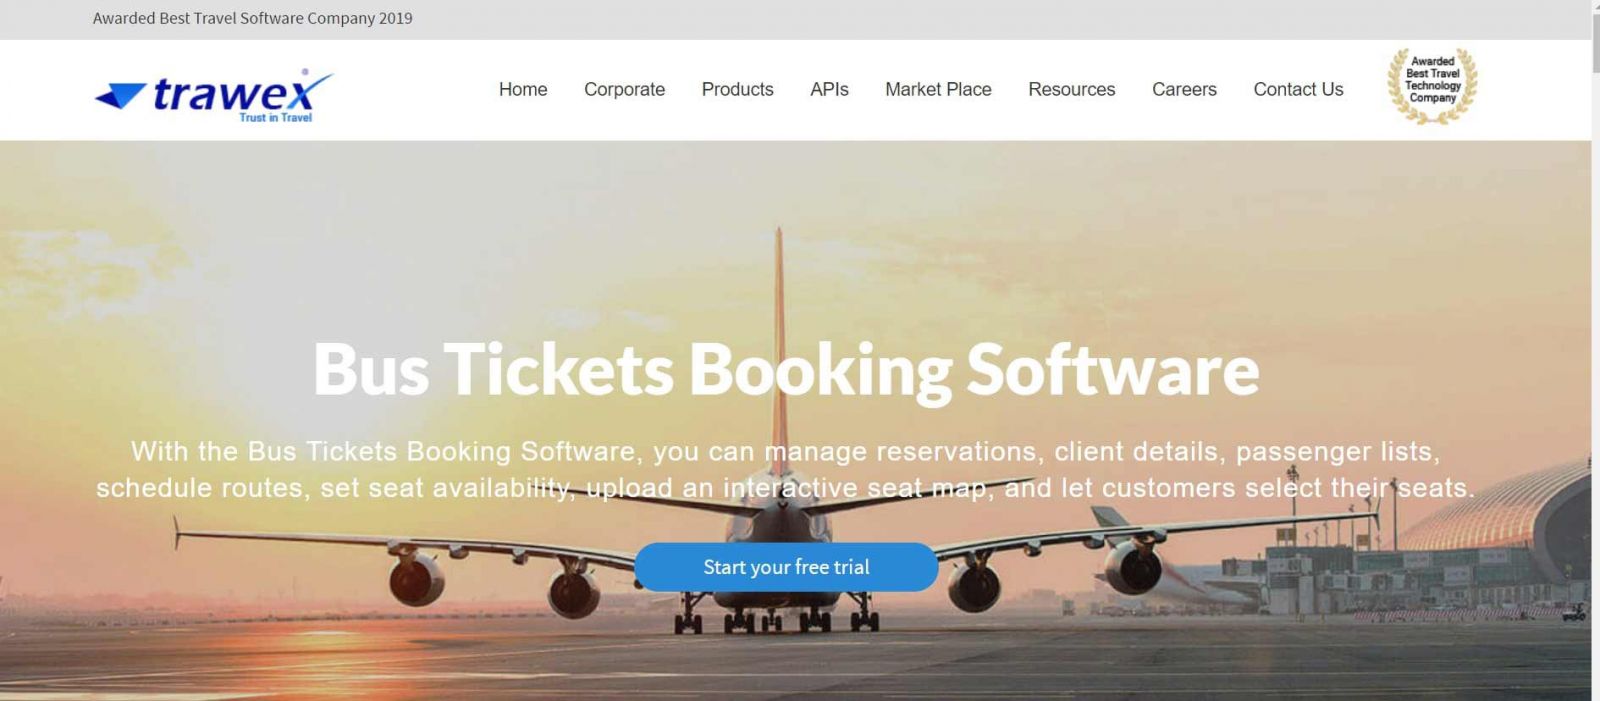 trawex-bus-ticket-booking-software